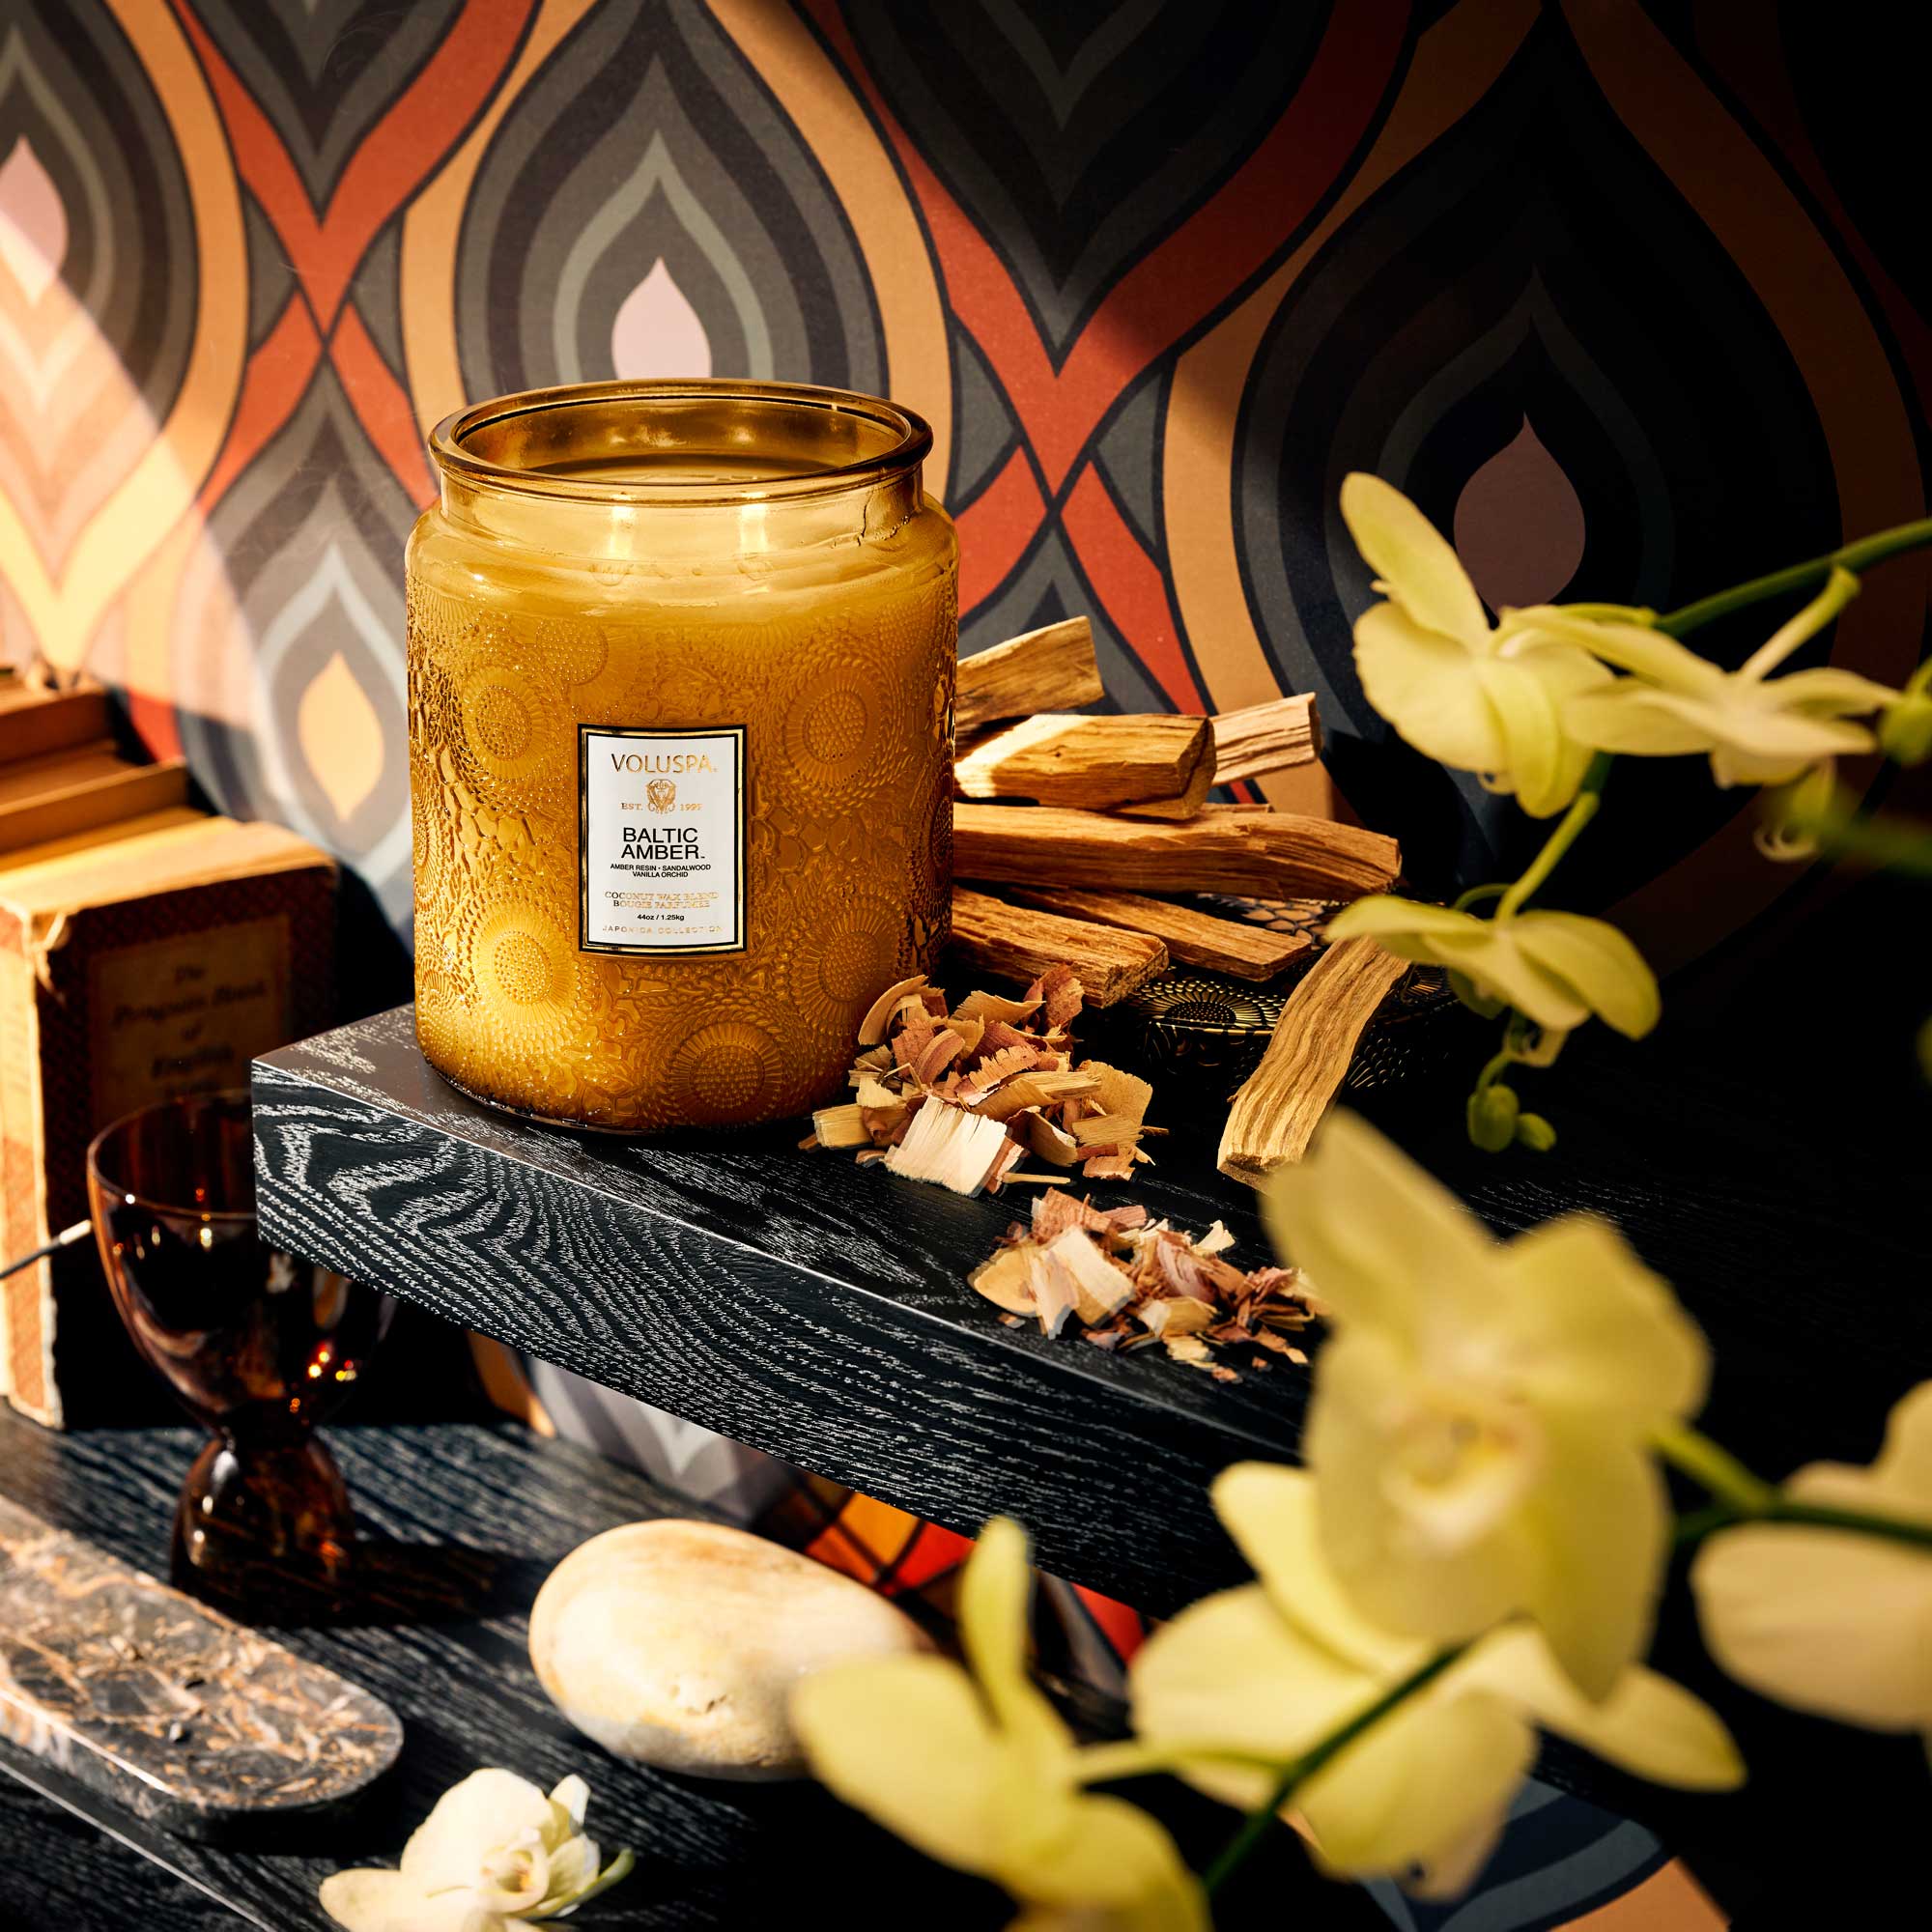 Voluspa Baltic Amber 44oz Luxe Jar Candle